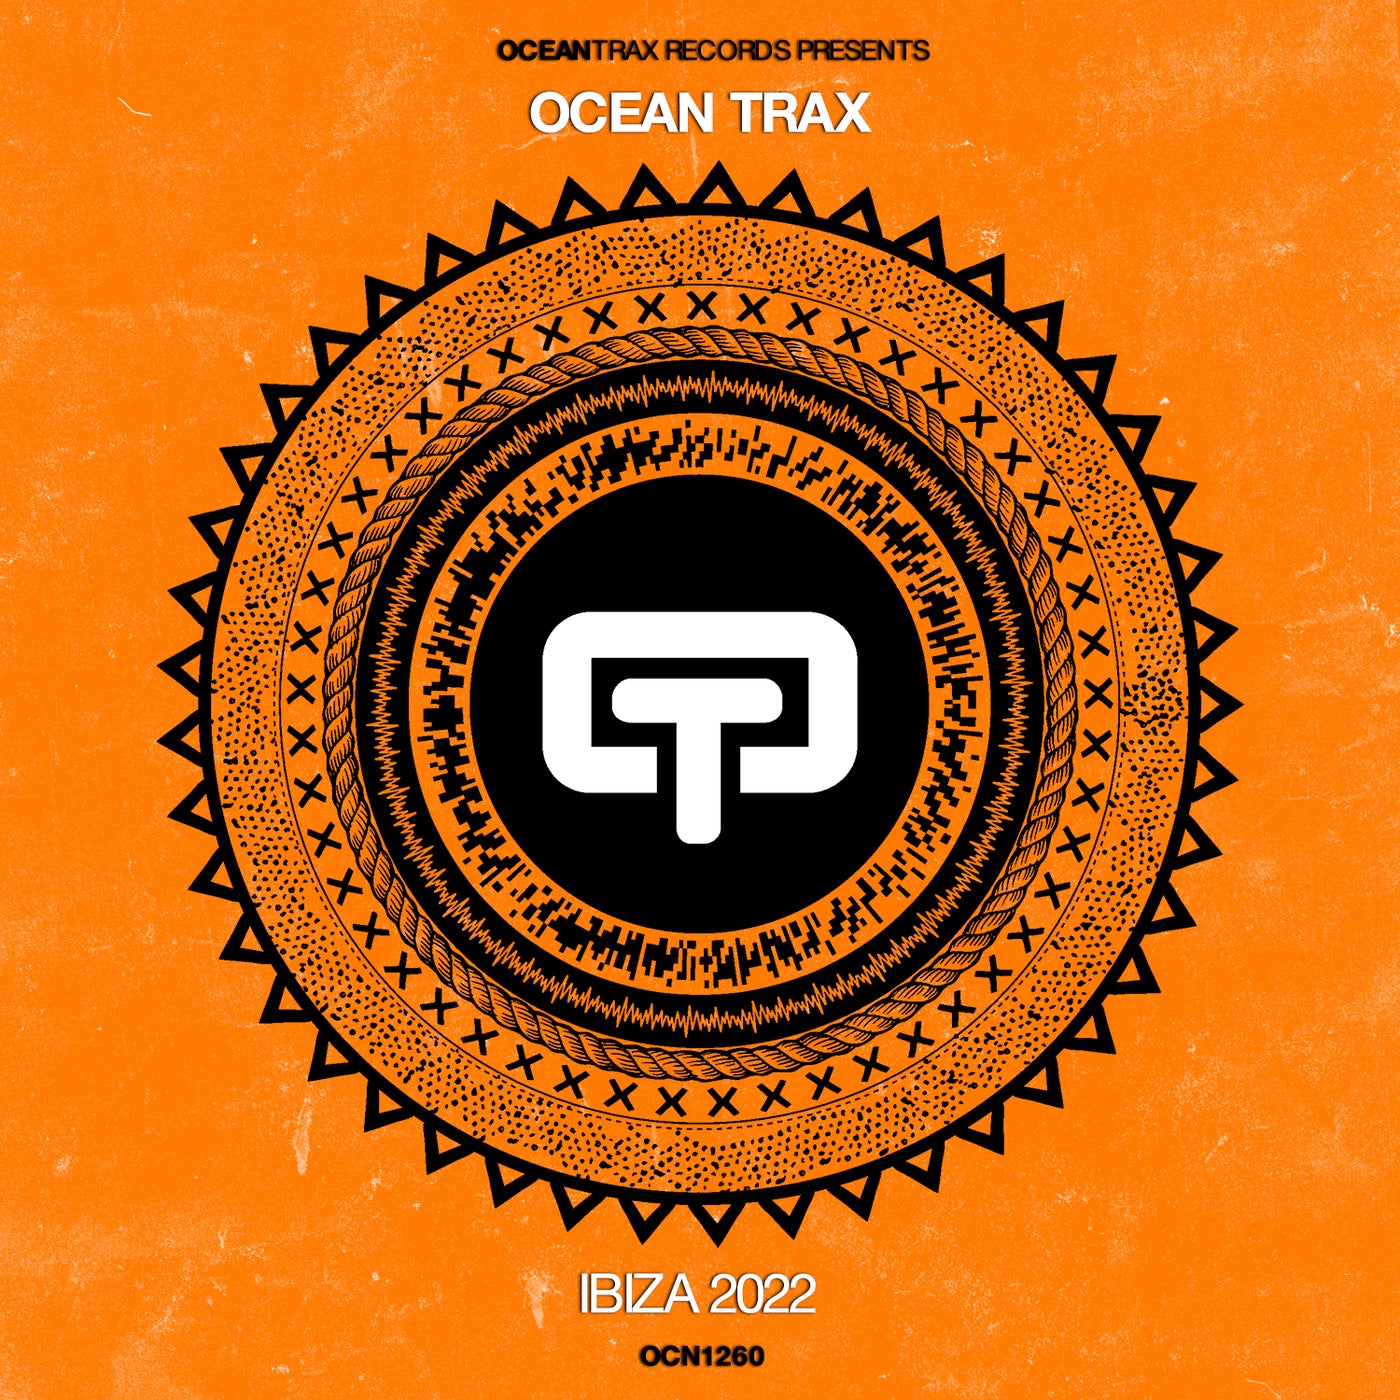 The Ocean Trax - Ibiza 2022